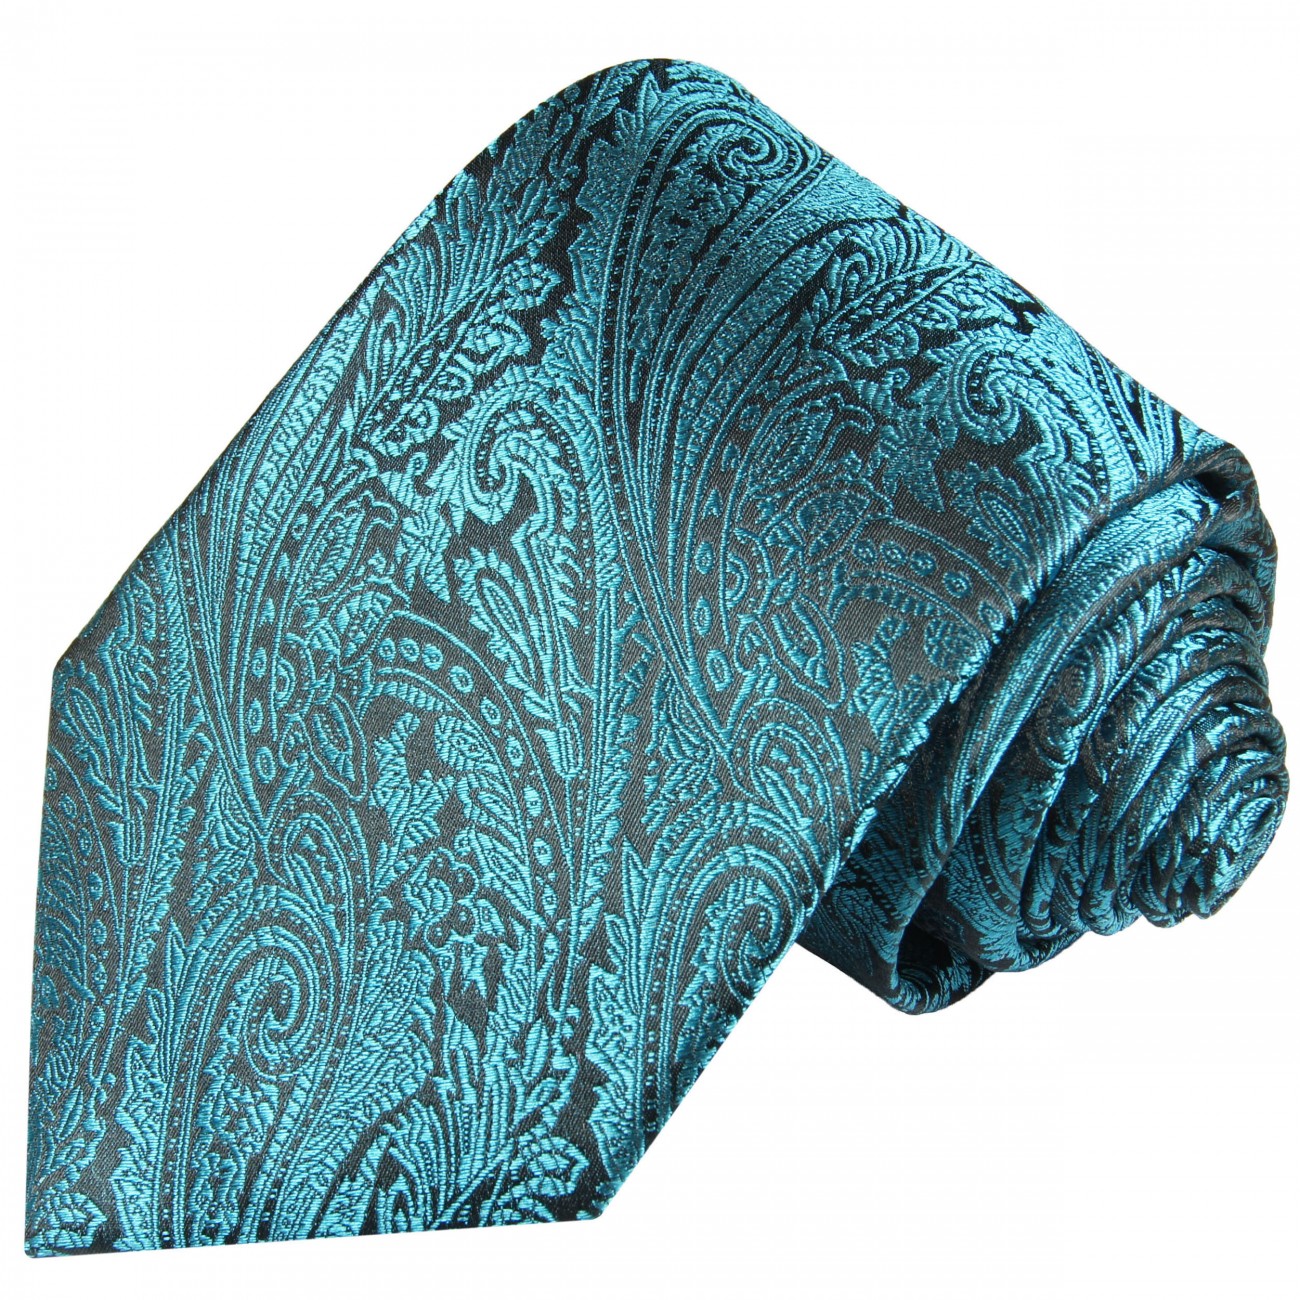 Krawatte aqua blau floral 373